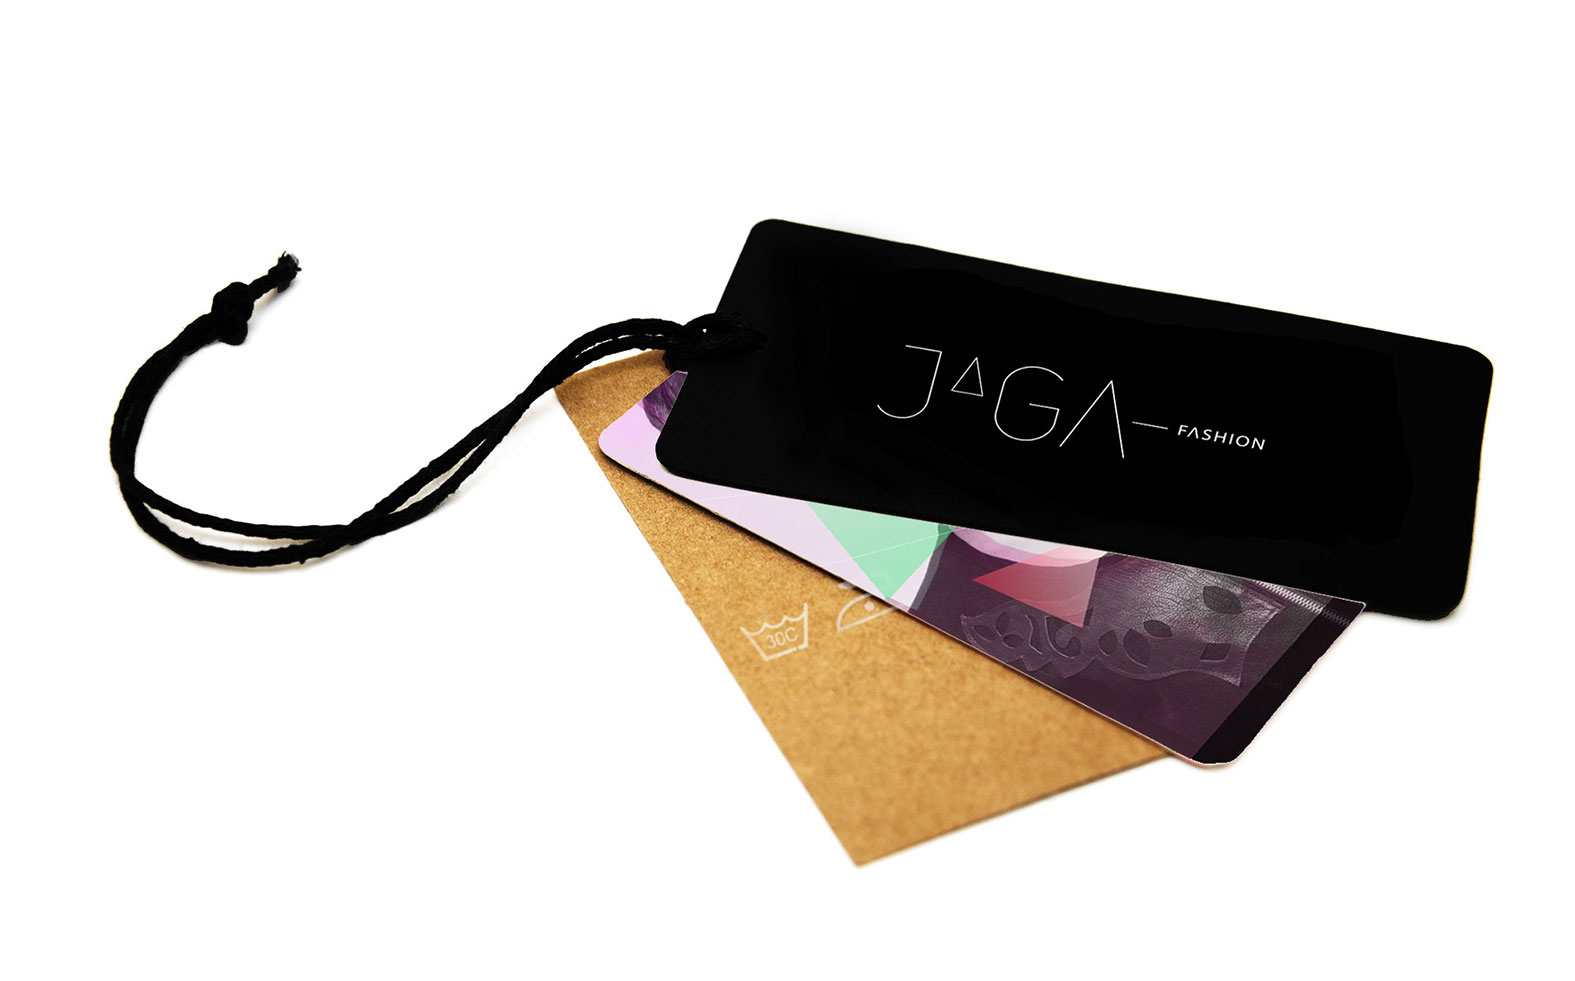 Clothing label with logo design for Jaga Fashion